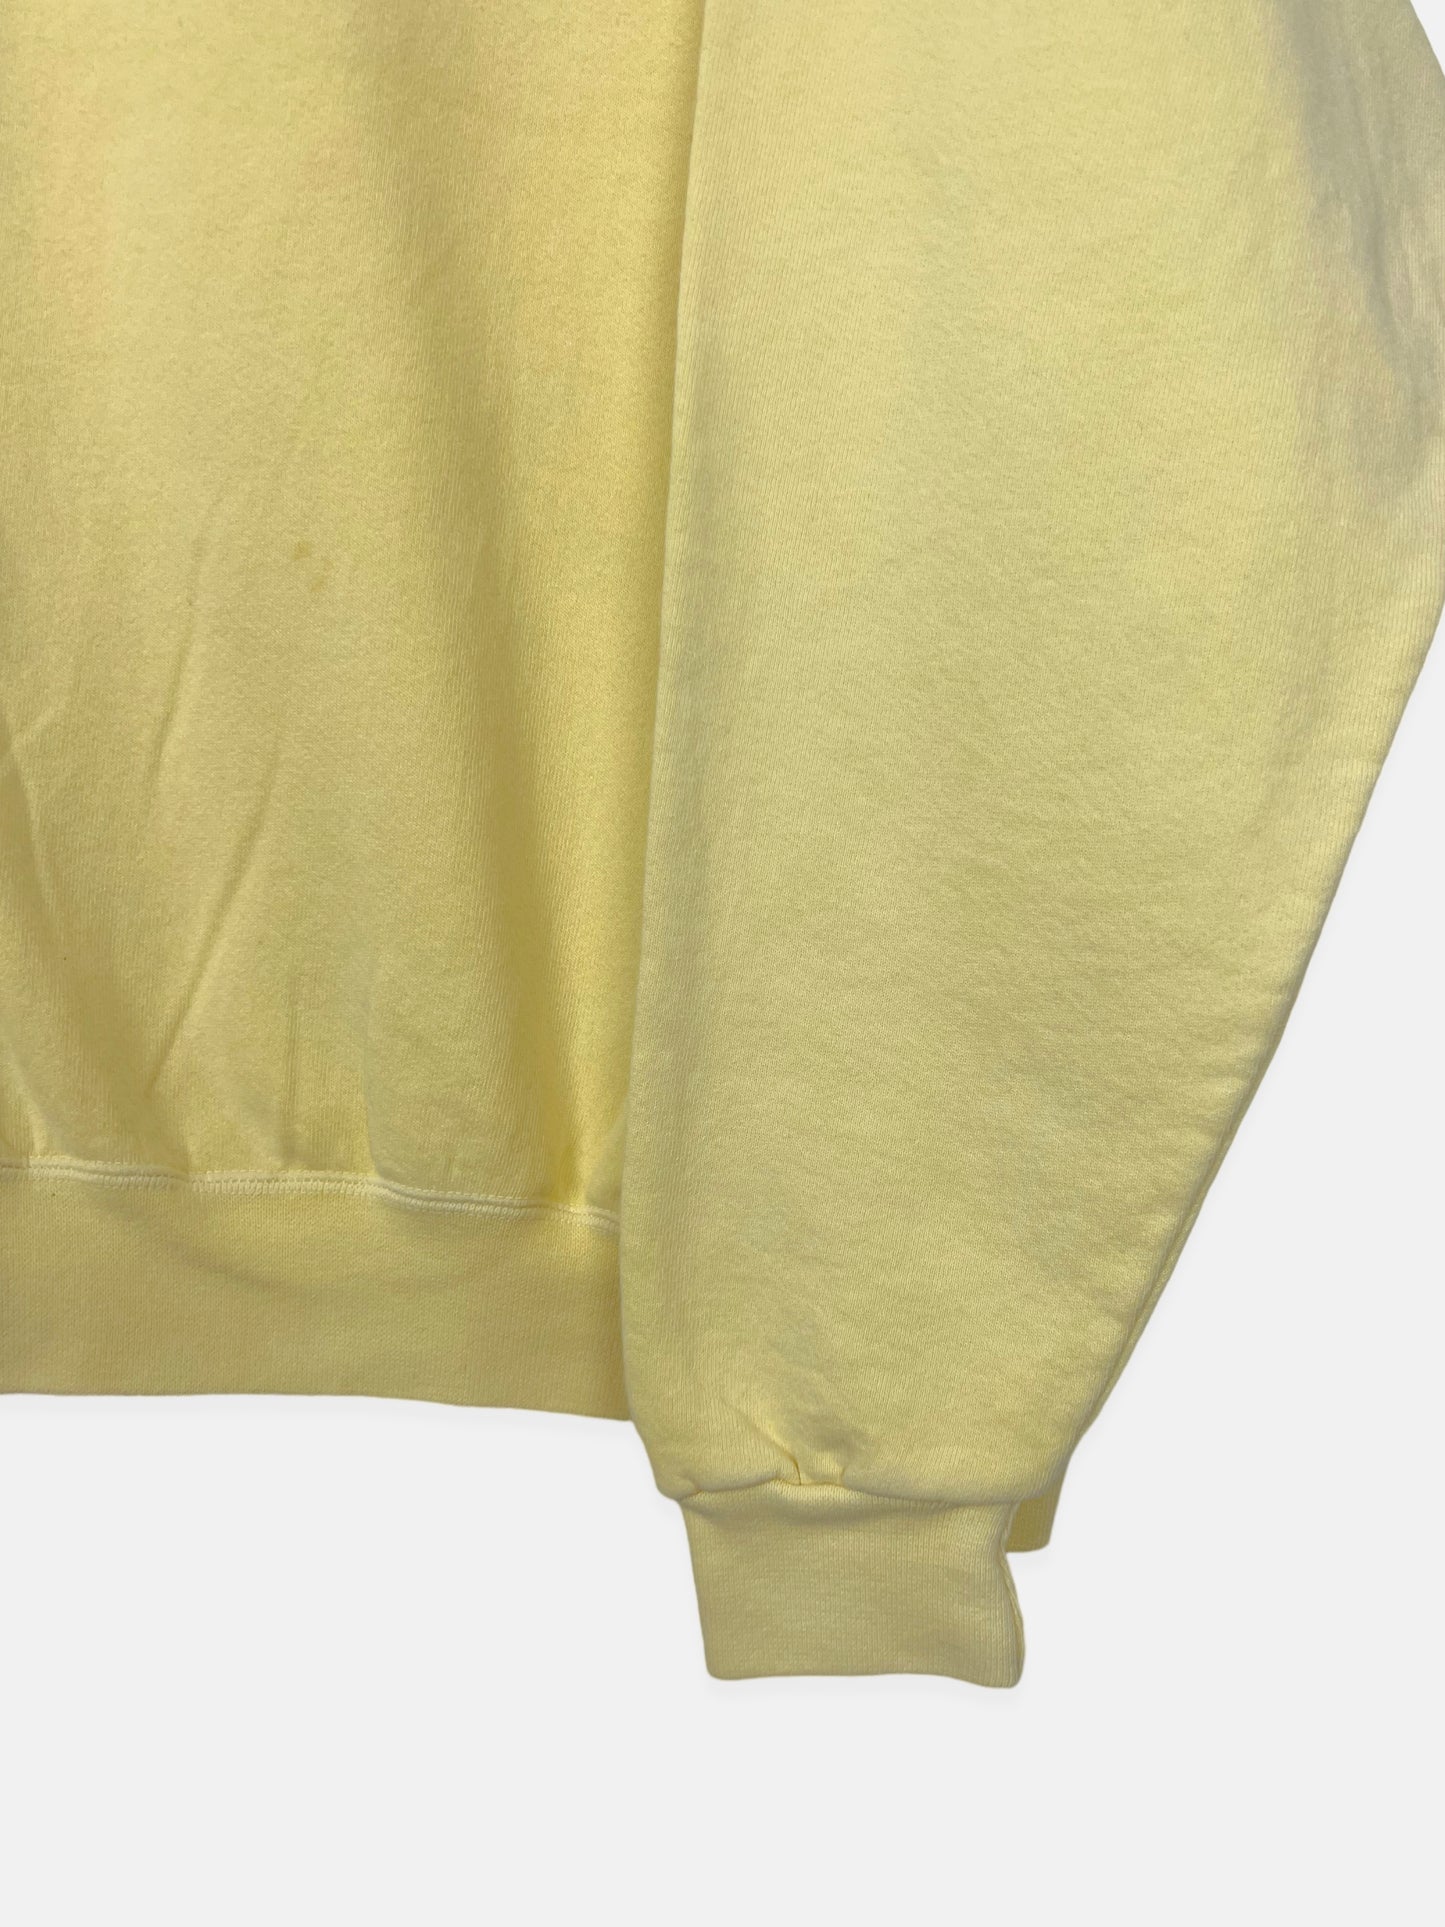 90's Ocracoke Island Embroidered Vintage Sweatshirt Size 2XL